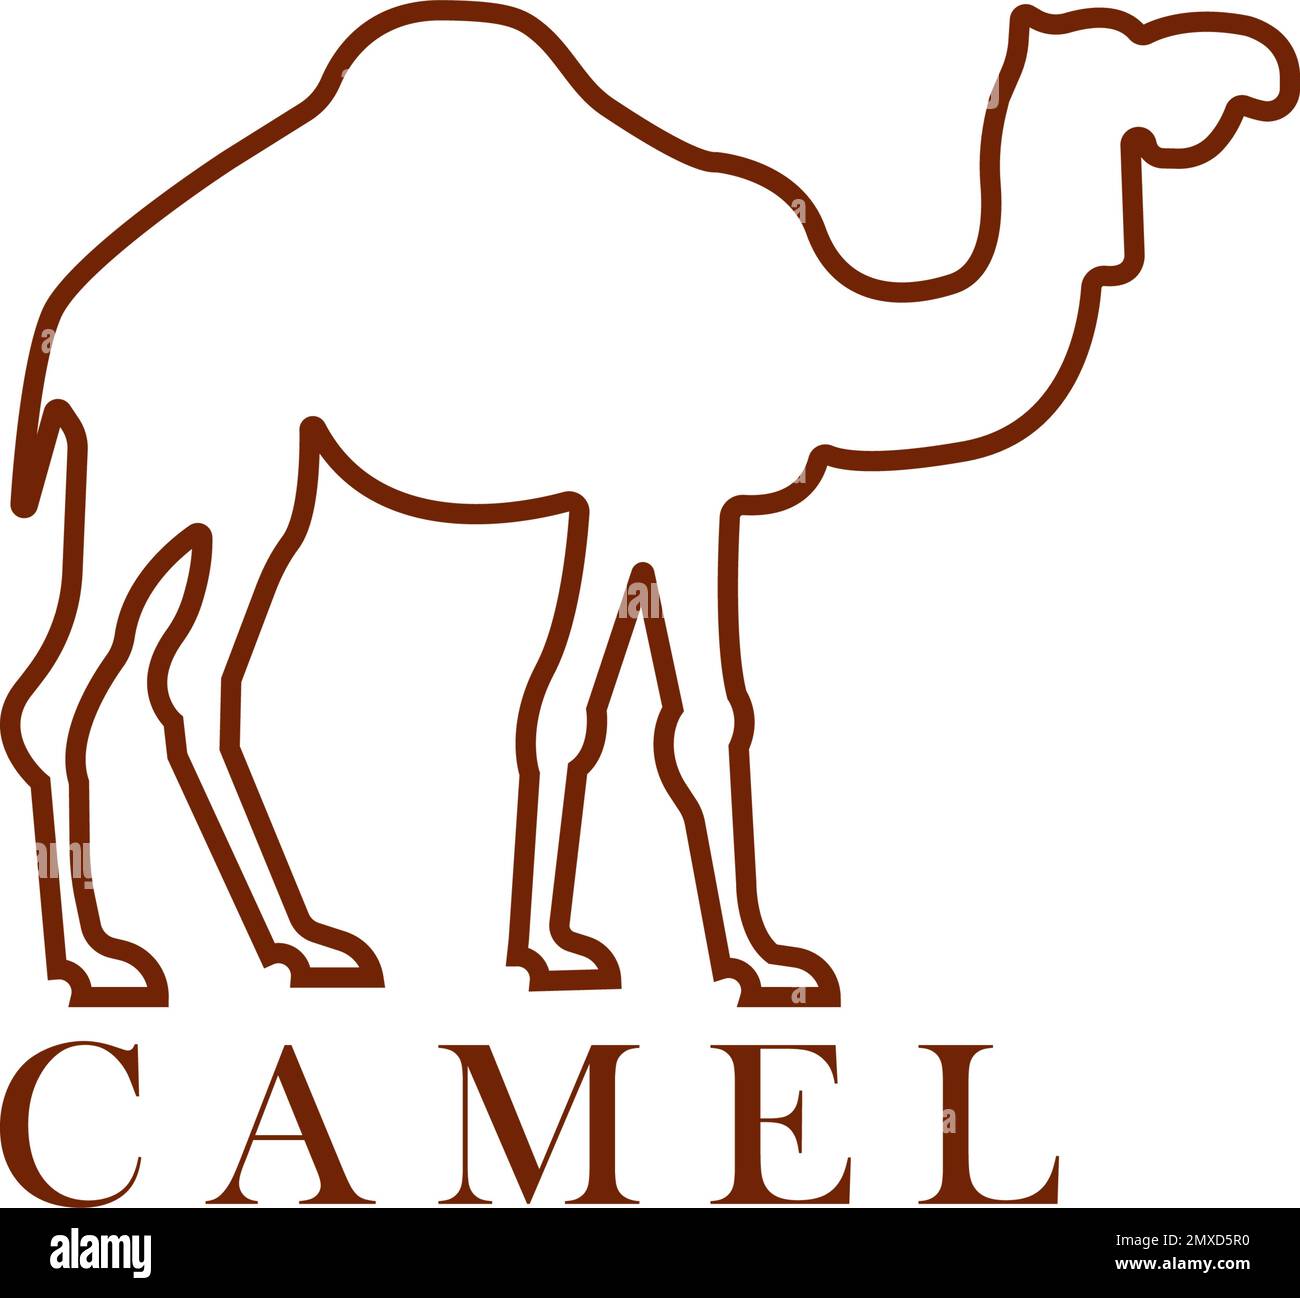 Camel icon silhouette vector illustration logo design Stock Vector ...